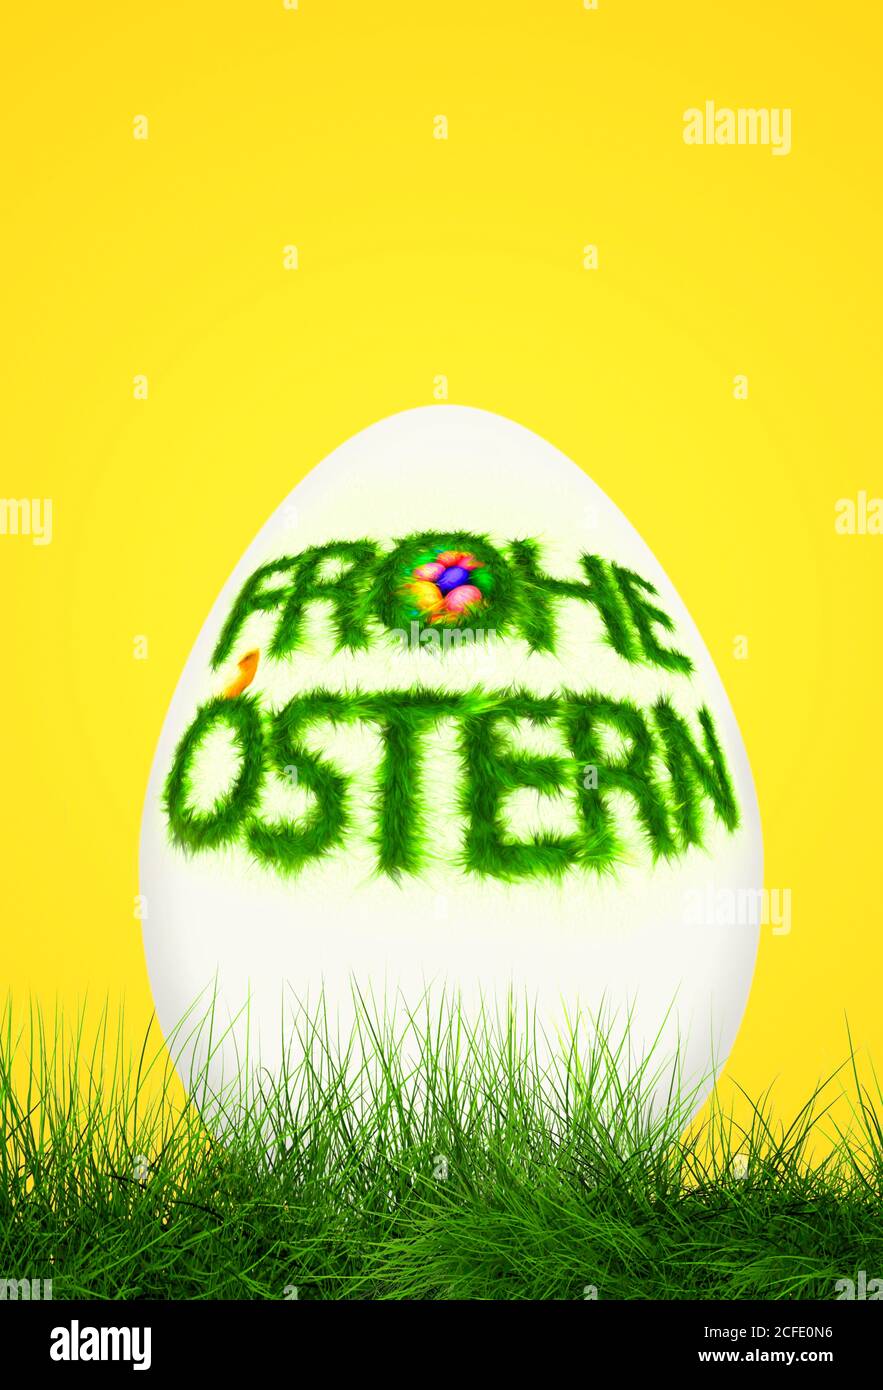 Easter egg, Happy Easter, Easter, grass, self-painted, childhood, illustration, Stock Photo